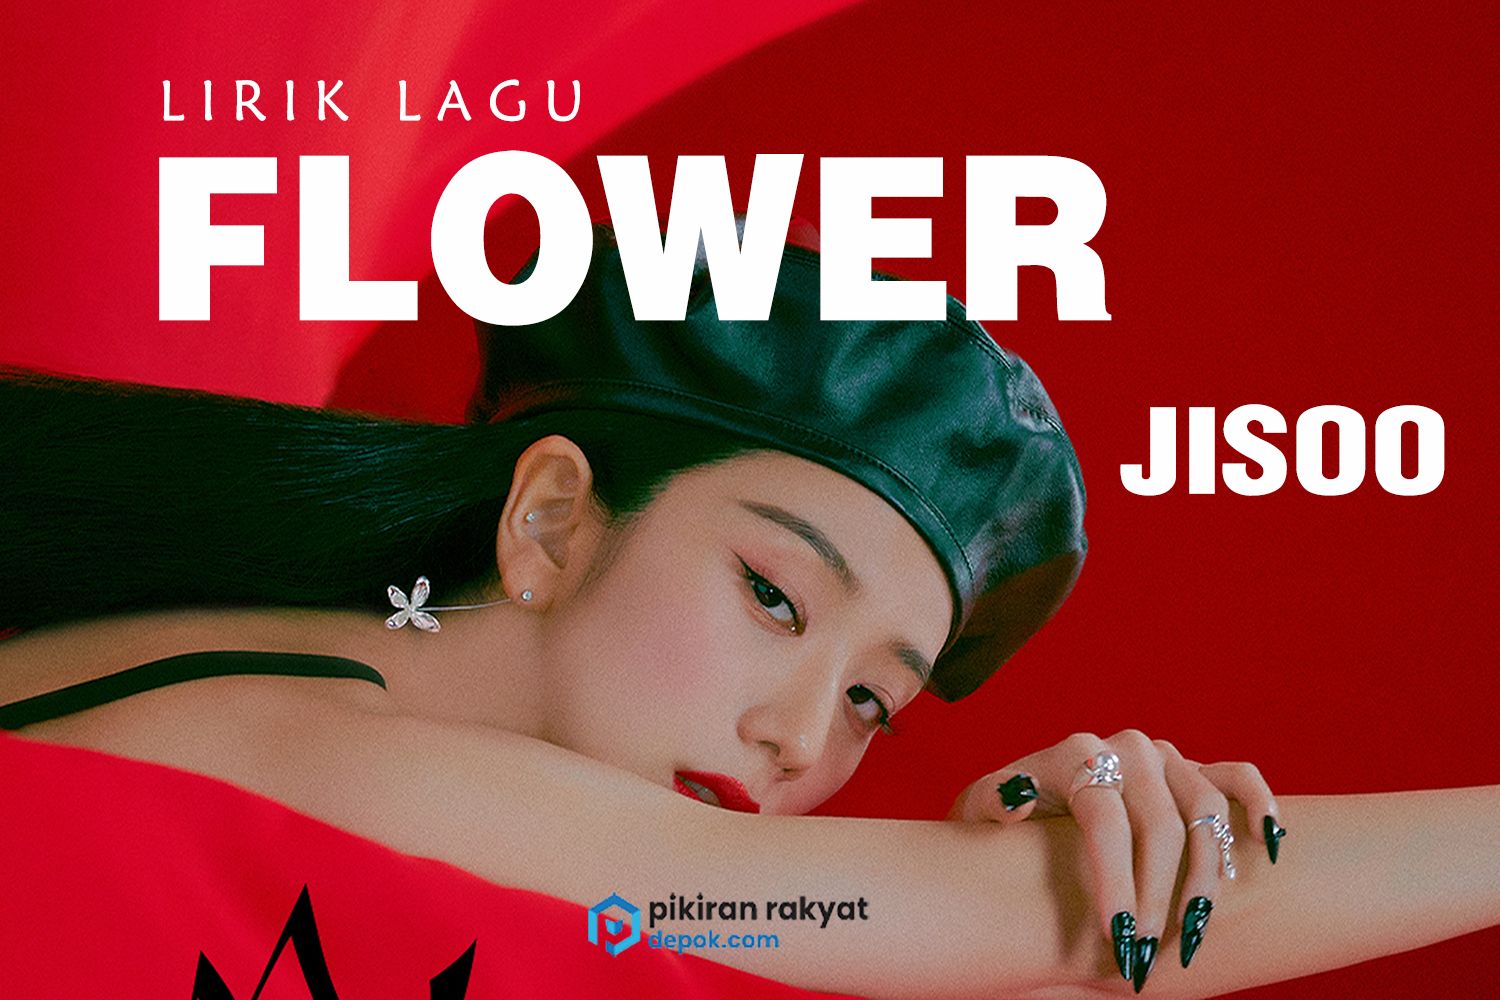 Lirik lagu Flower yang dinyanyikan Jisoo BLACKPINK